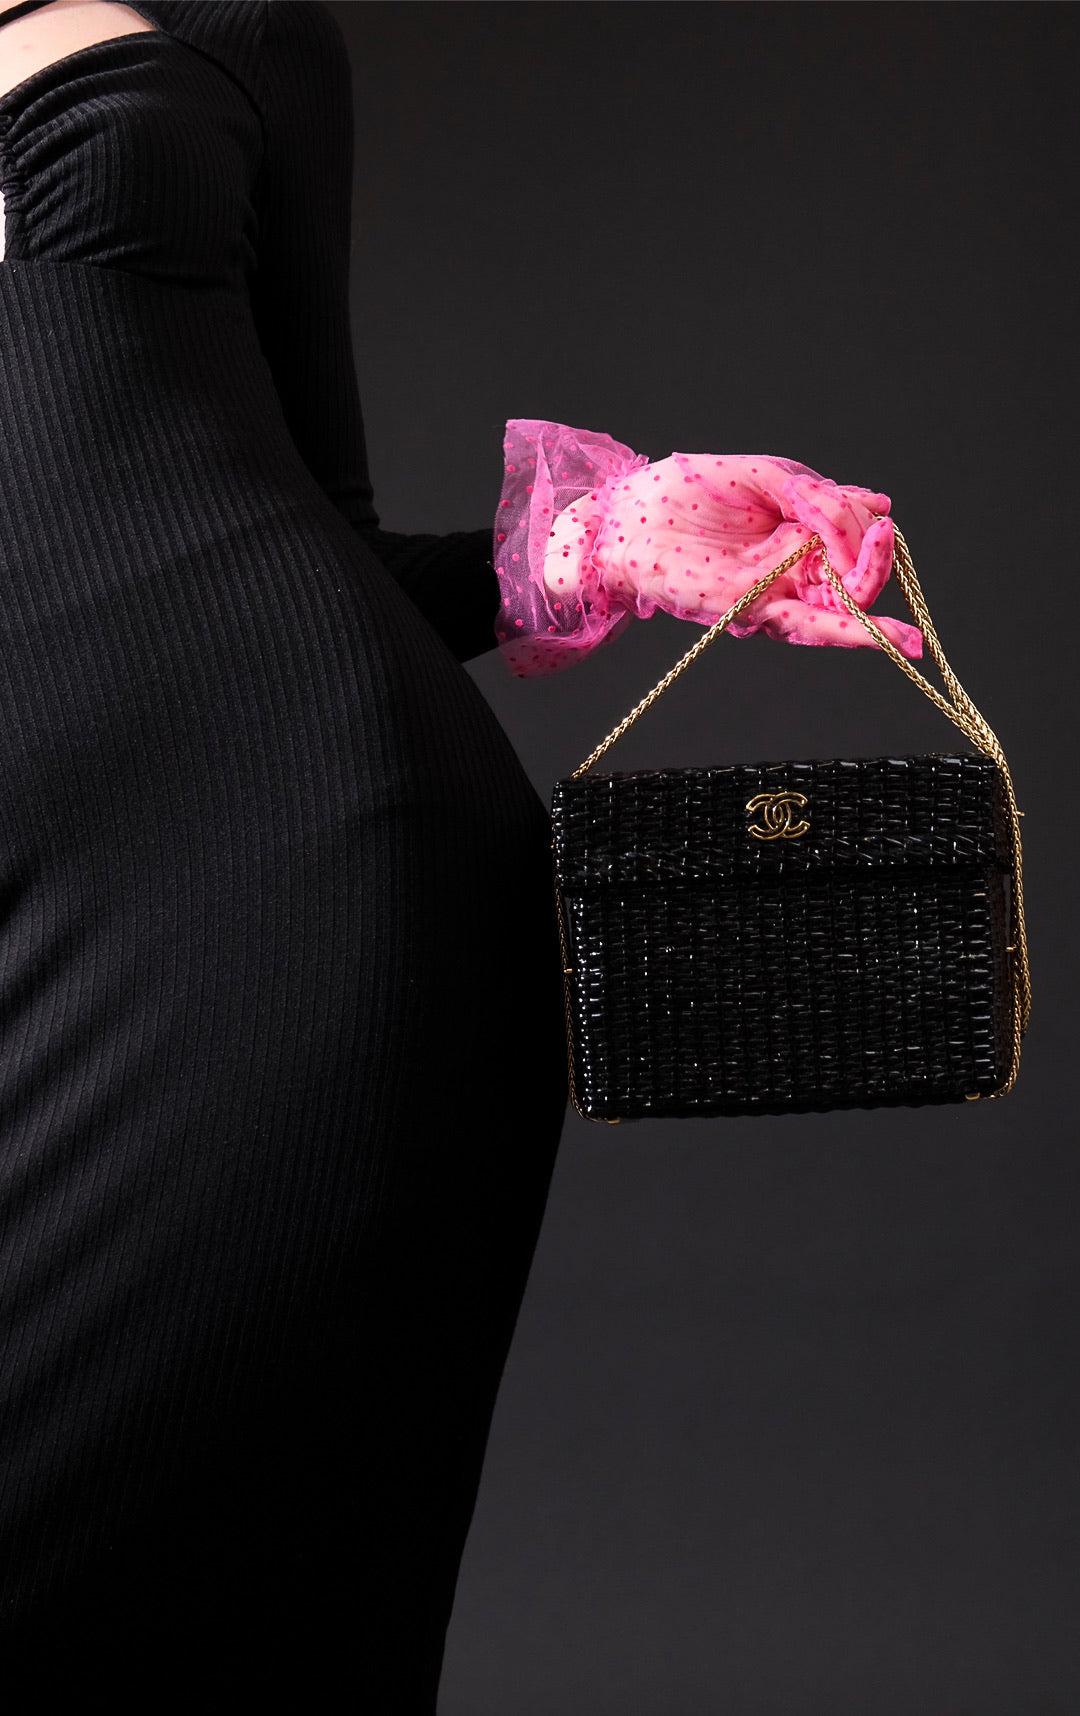 Chanel Vintage Black Wicker CC Picnic Lunch Basket Box Bag Gold Hardware